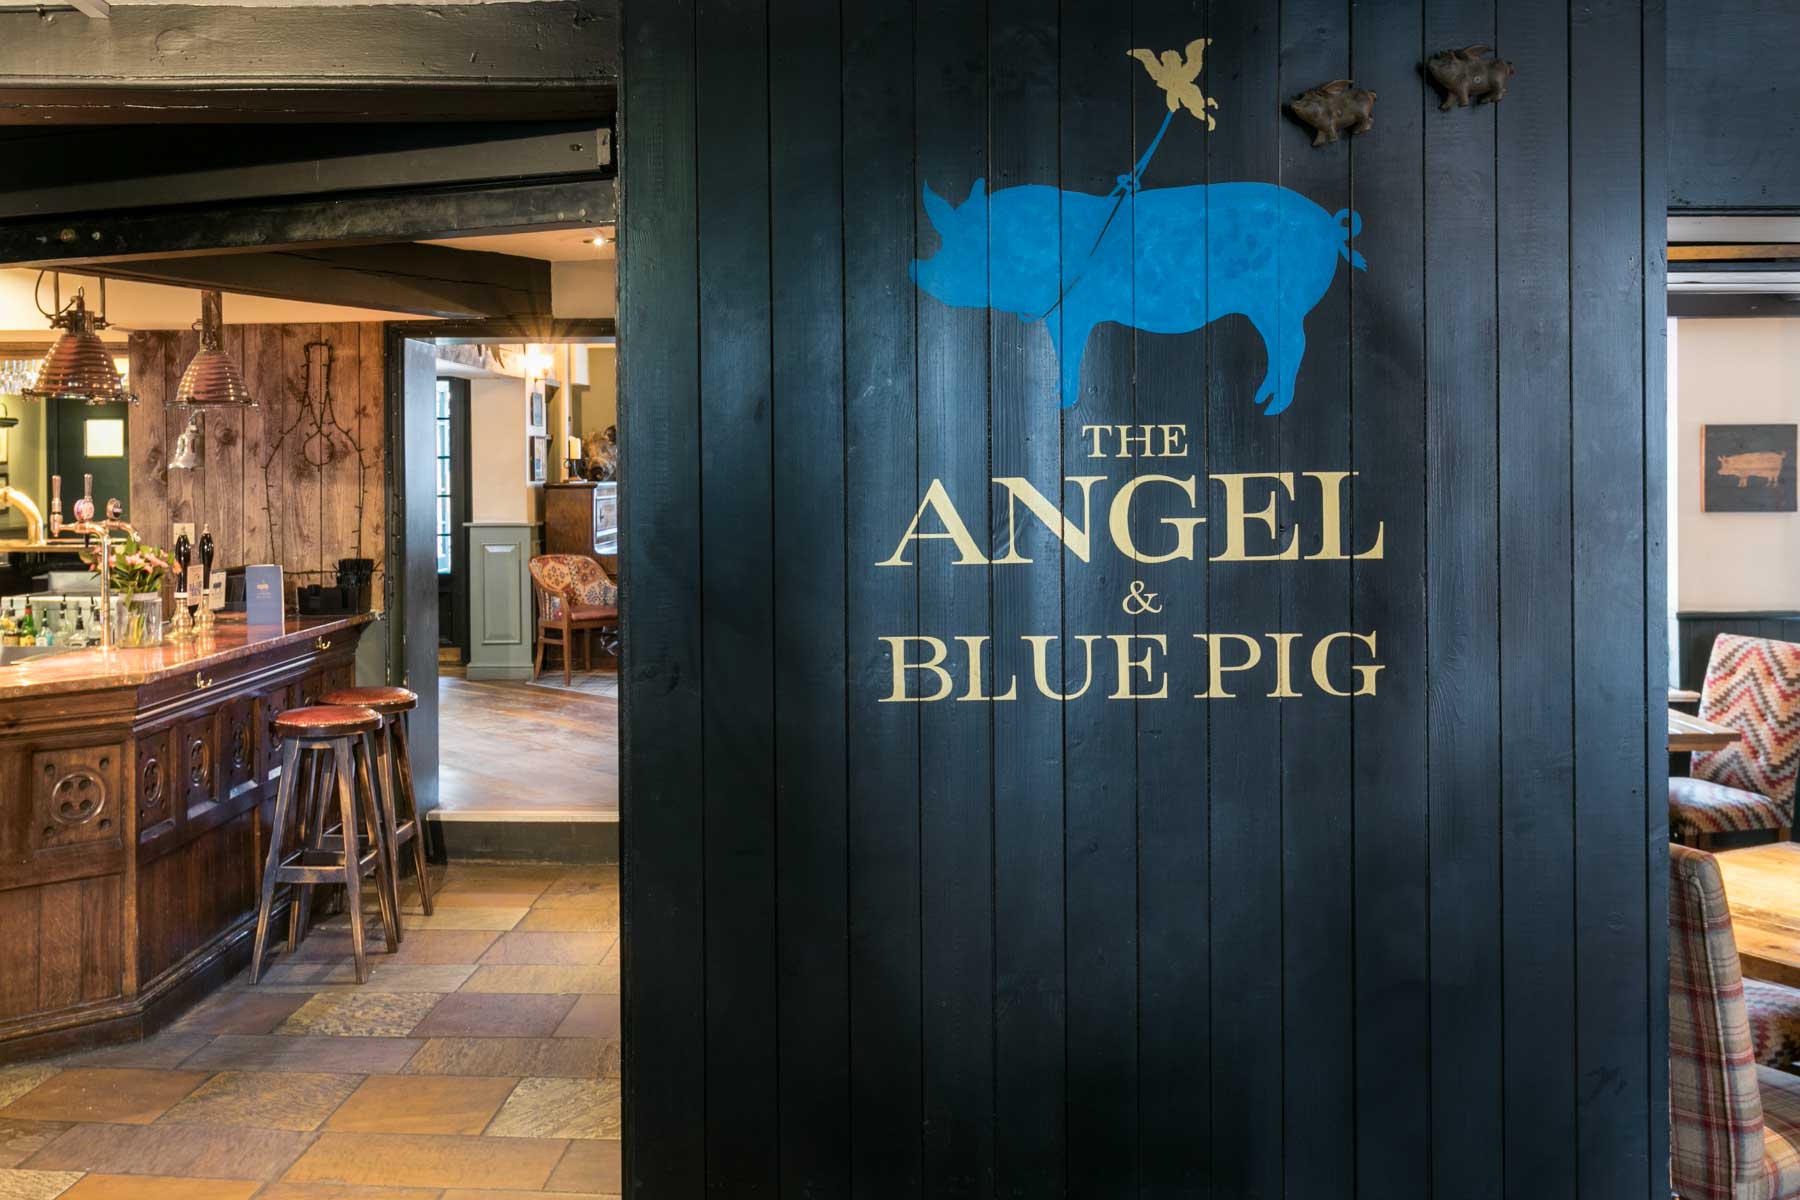 The Angel & Blue Pig